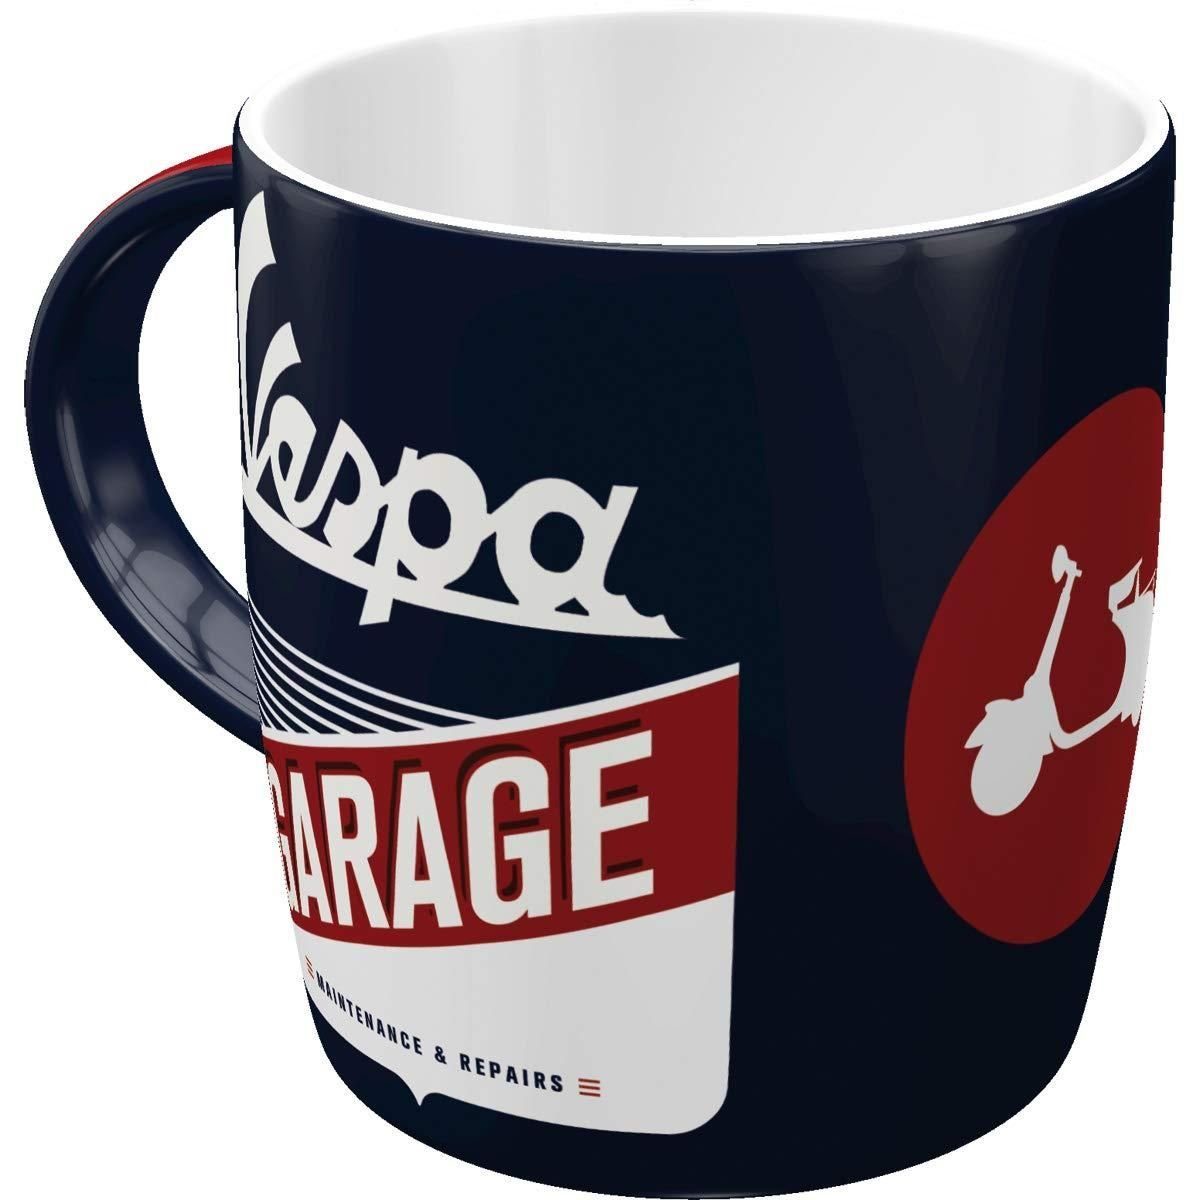 Nostalgic-Art Tasse Kaffeetasse - Vespa - Vespa Garage